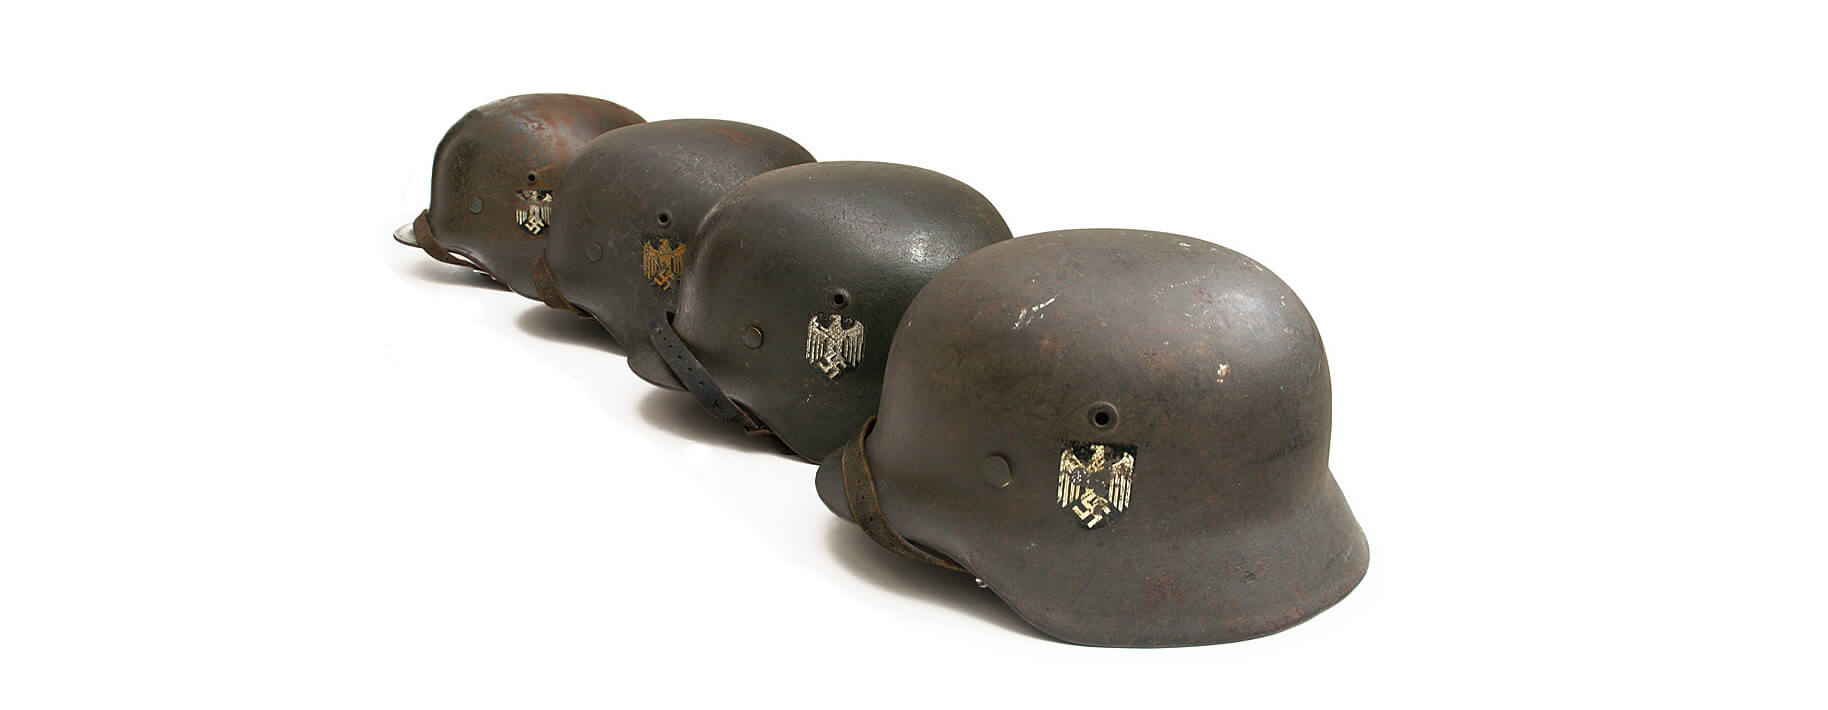 German WWII helmets